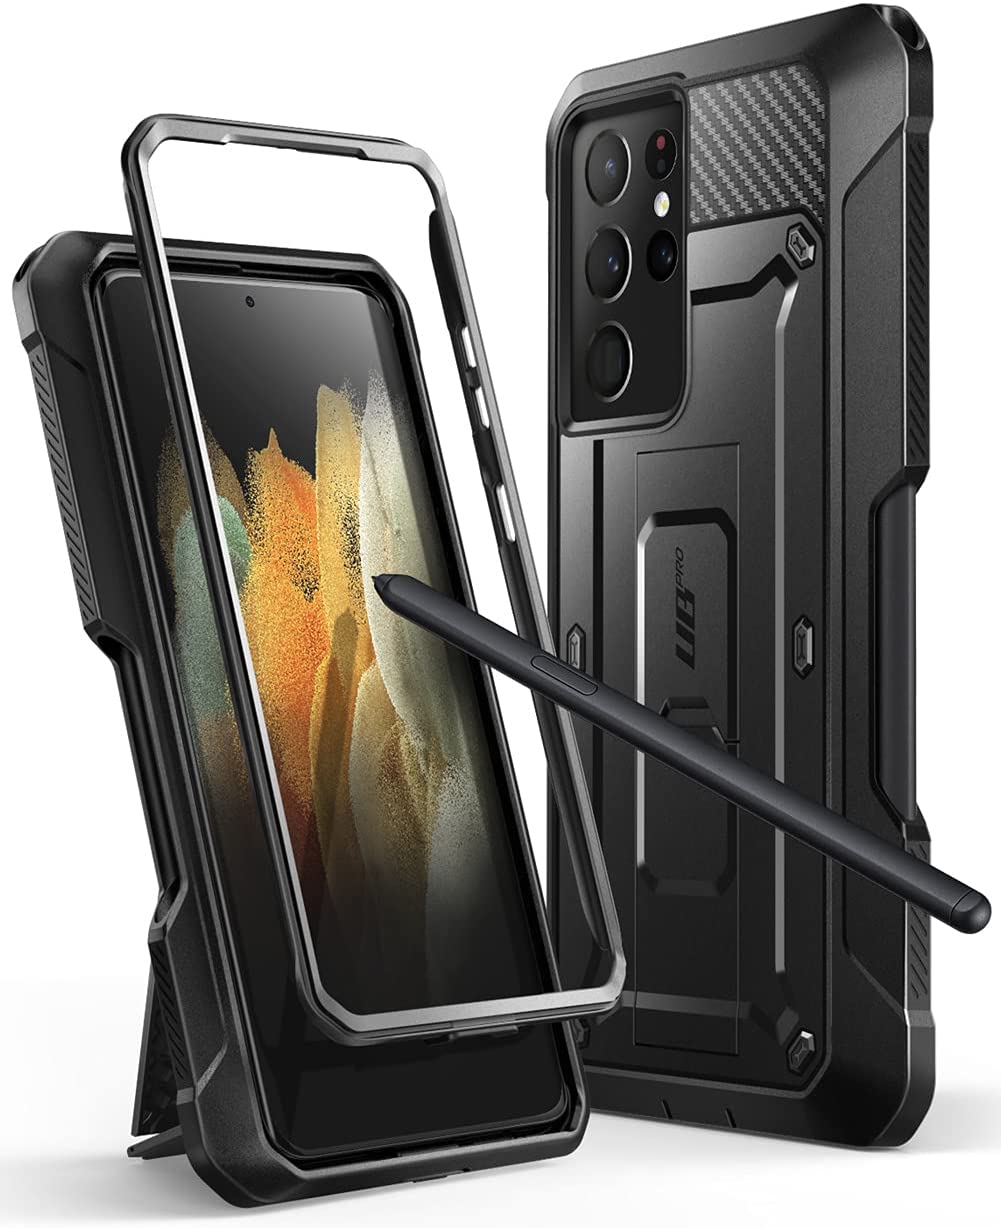 Supcase Ub Pro Galaxy S21 Ultra Case